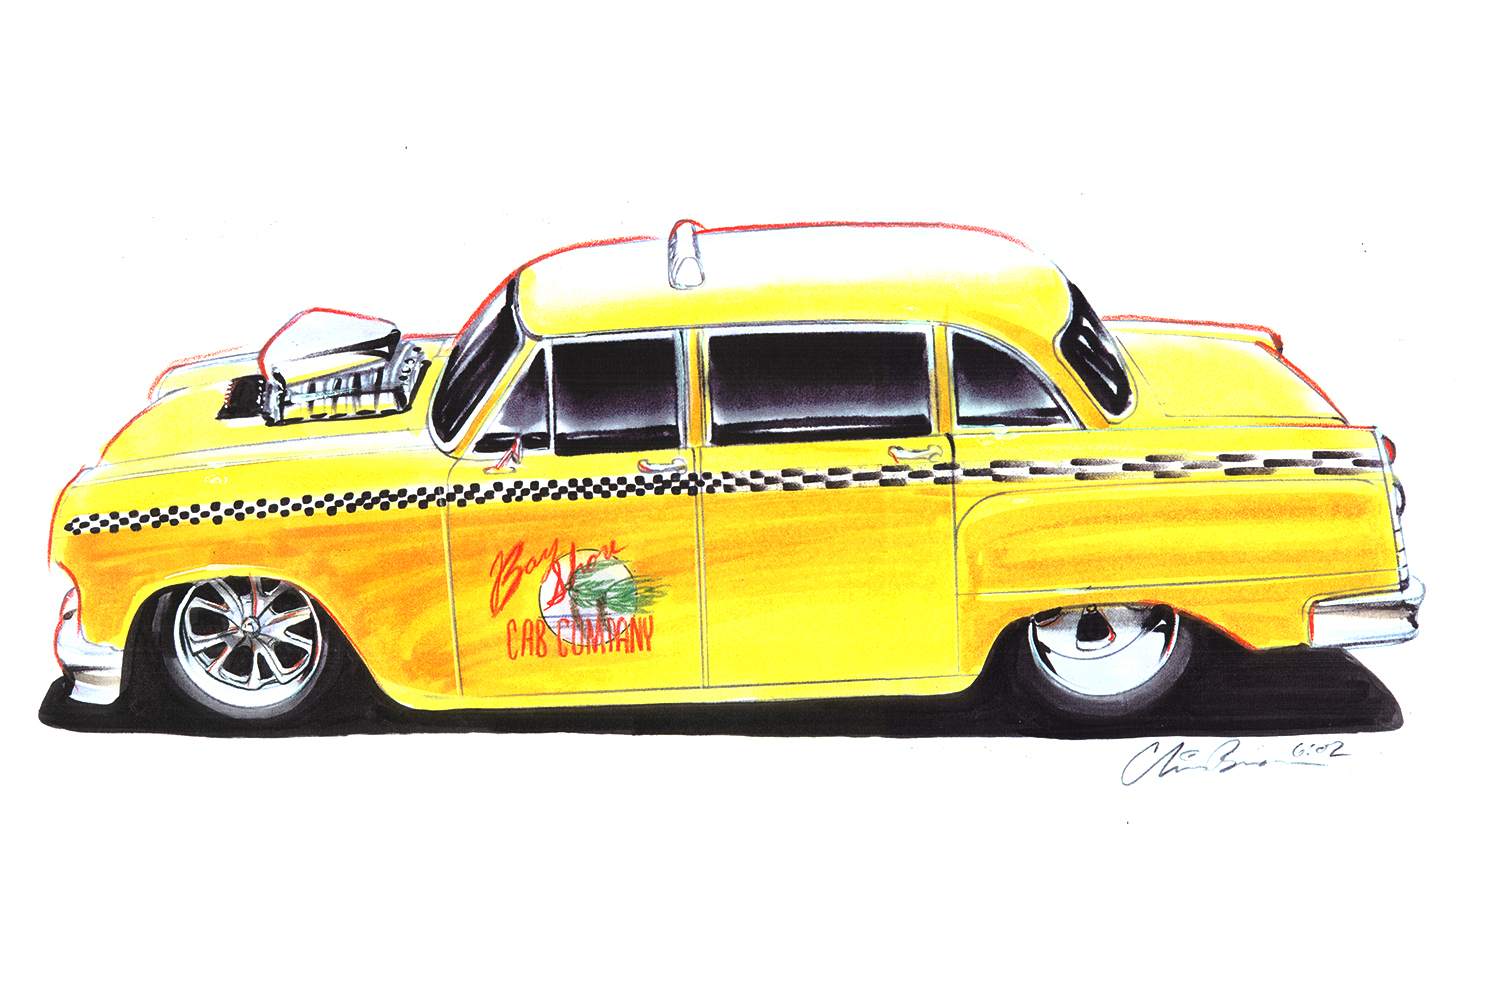 Richard Berg's Checker Cab